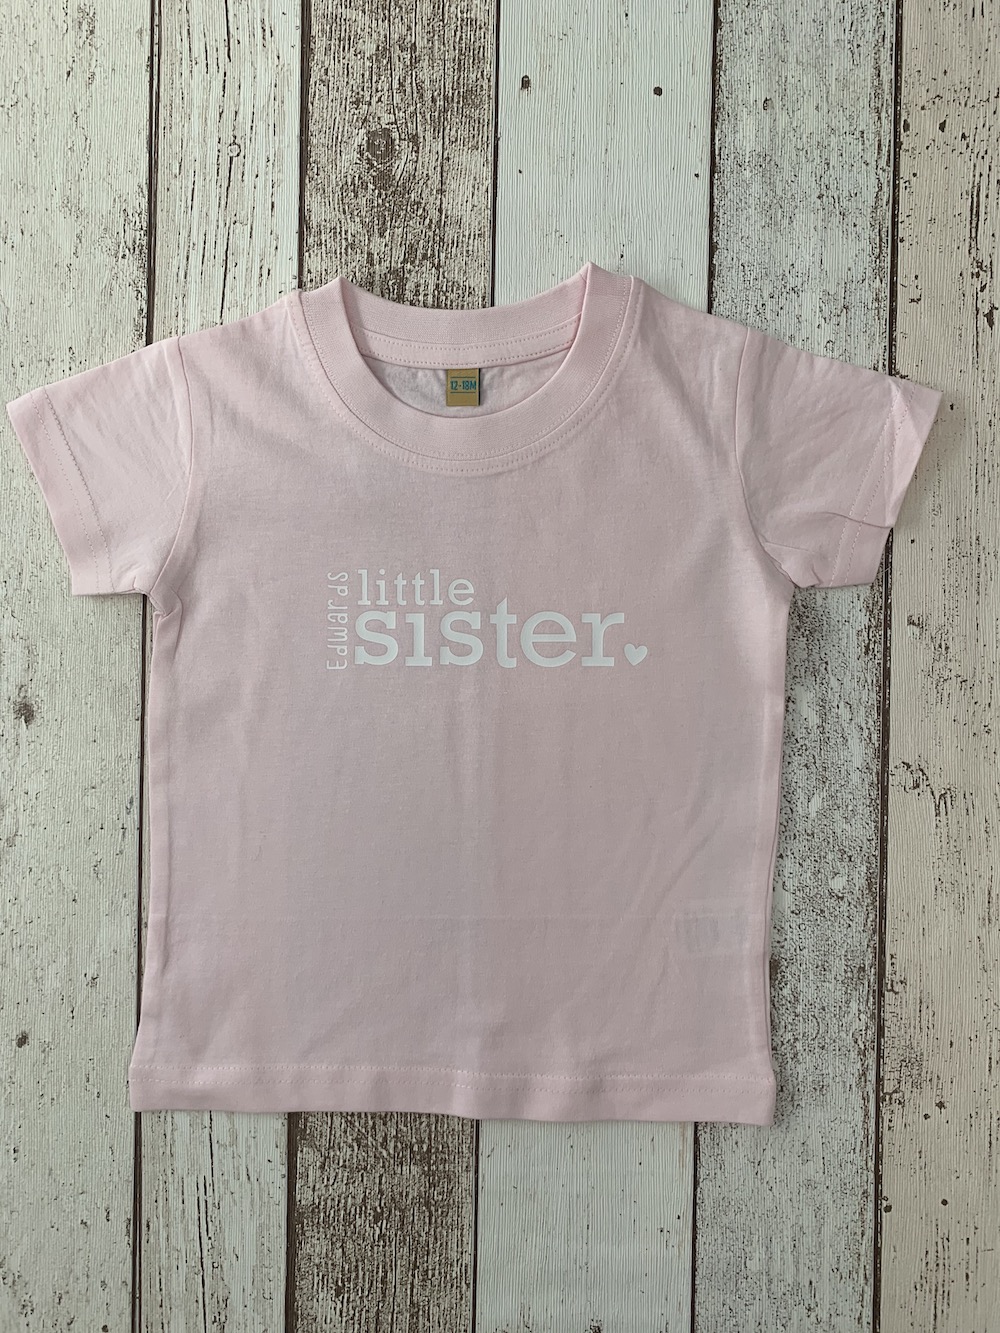 Little Sister Tshirt – Pink